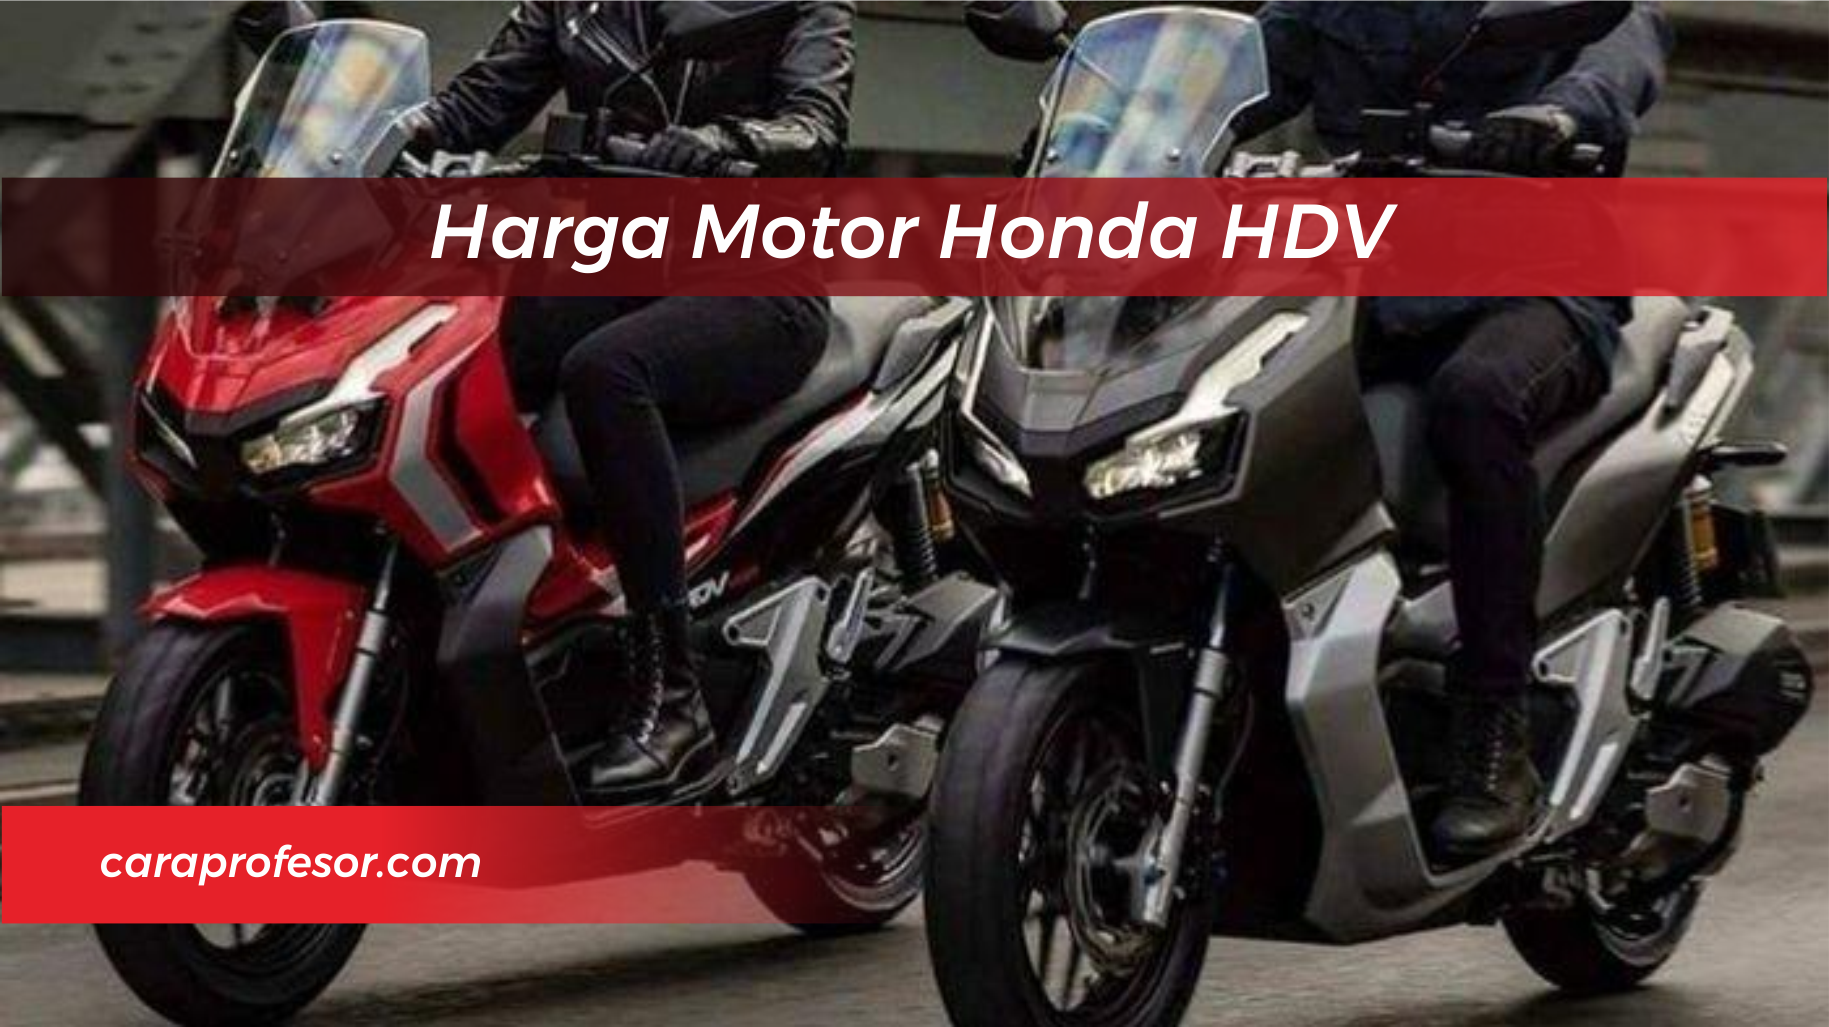 Harga Motor Honda HDV